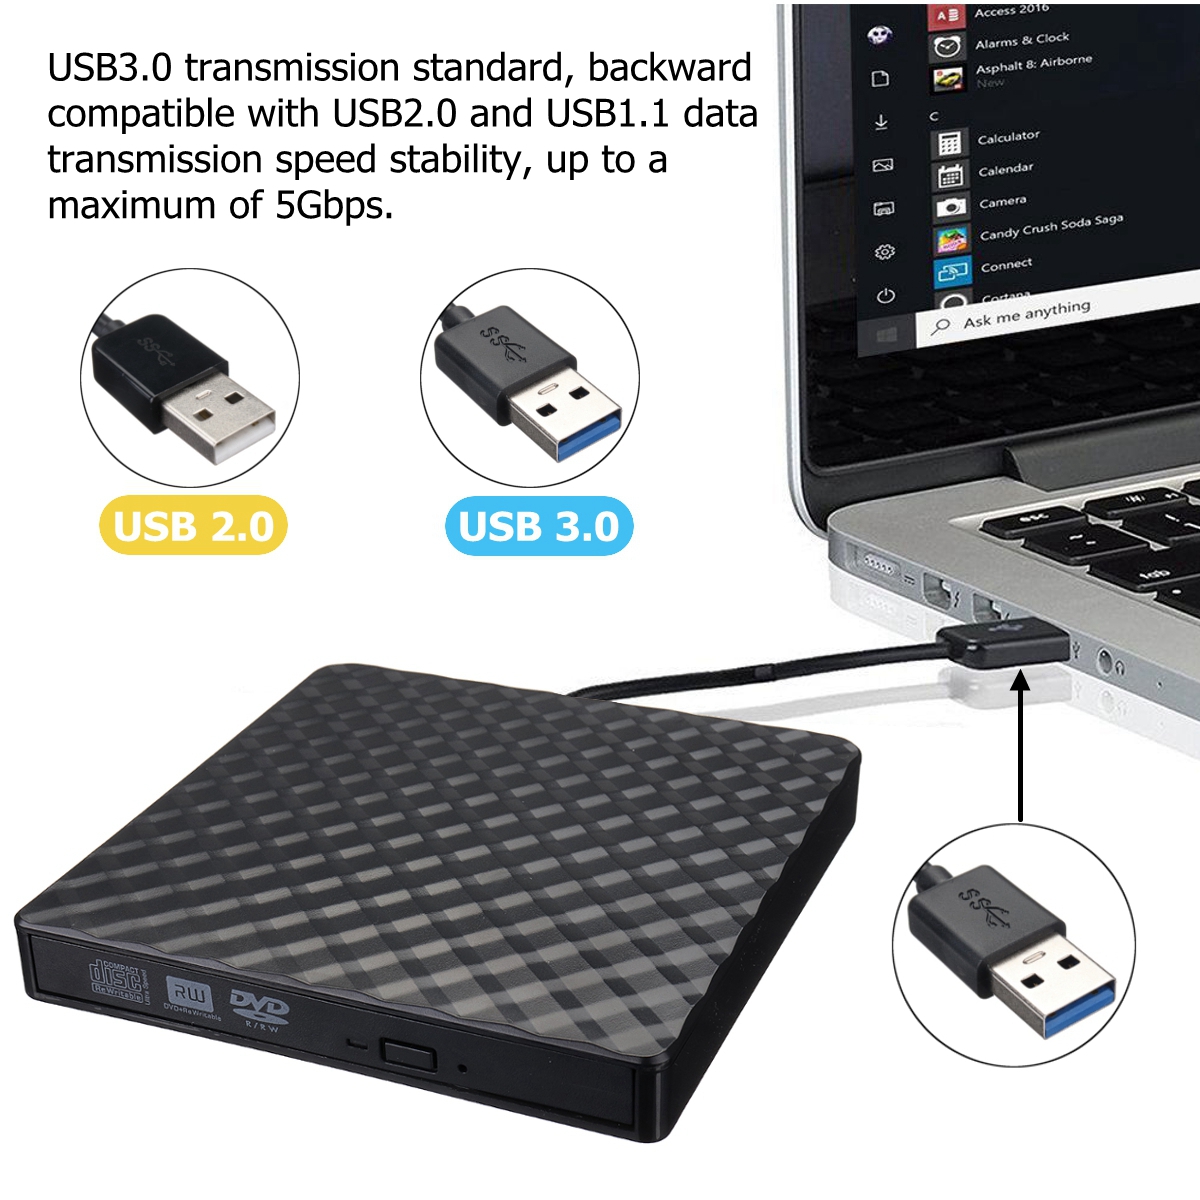 External-USB30-DVD-RW-CD-Writer-Slim-Optical-Drive-Burner-Reader-Player-For-PC-Laptop-1633940-5